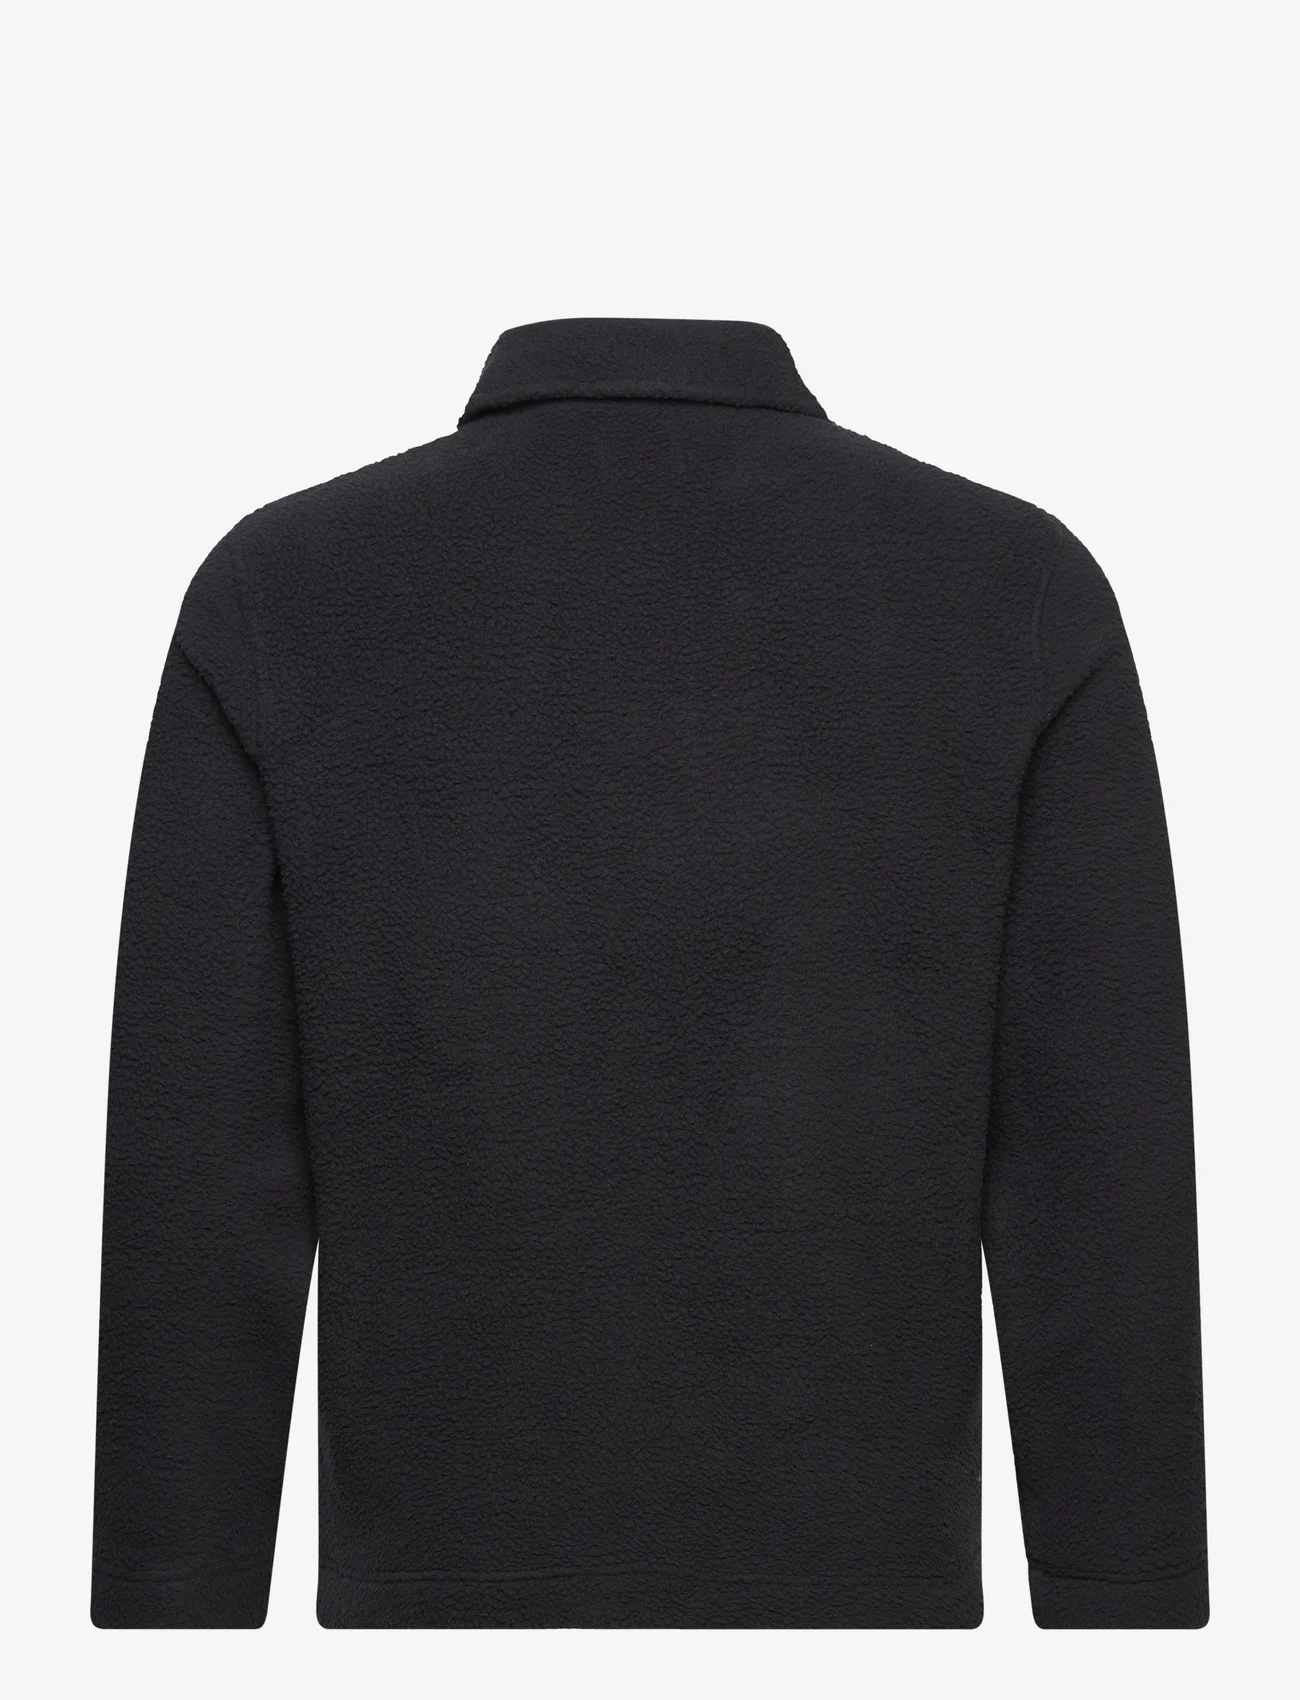 Armor Lux - Sweatshirt  Héritage - mid layer jackets - vichy oliva/tandoori h23 - 1